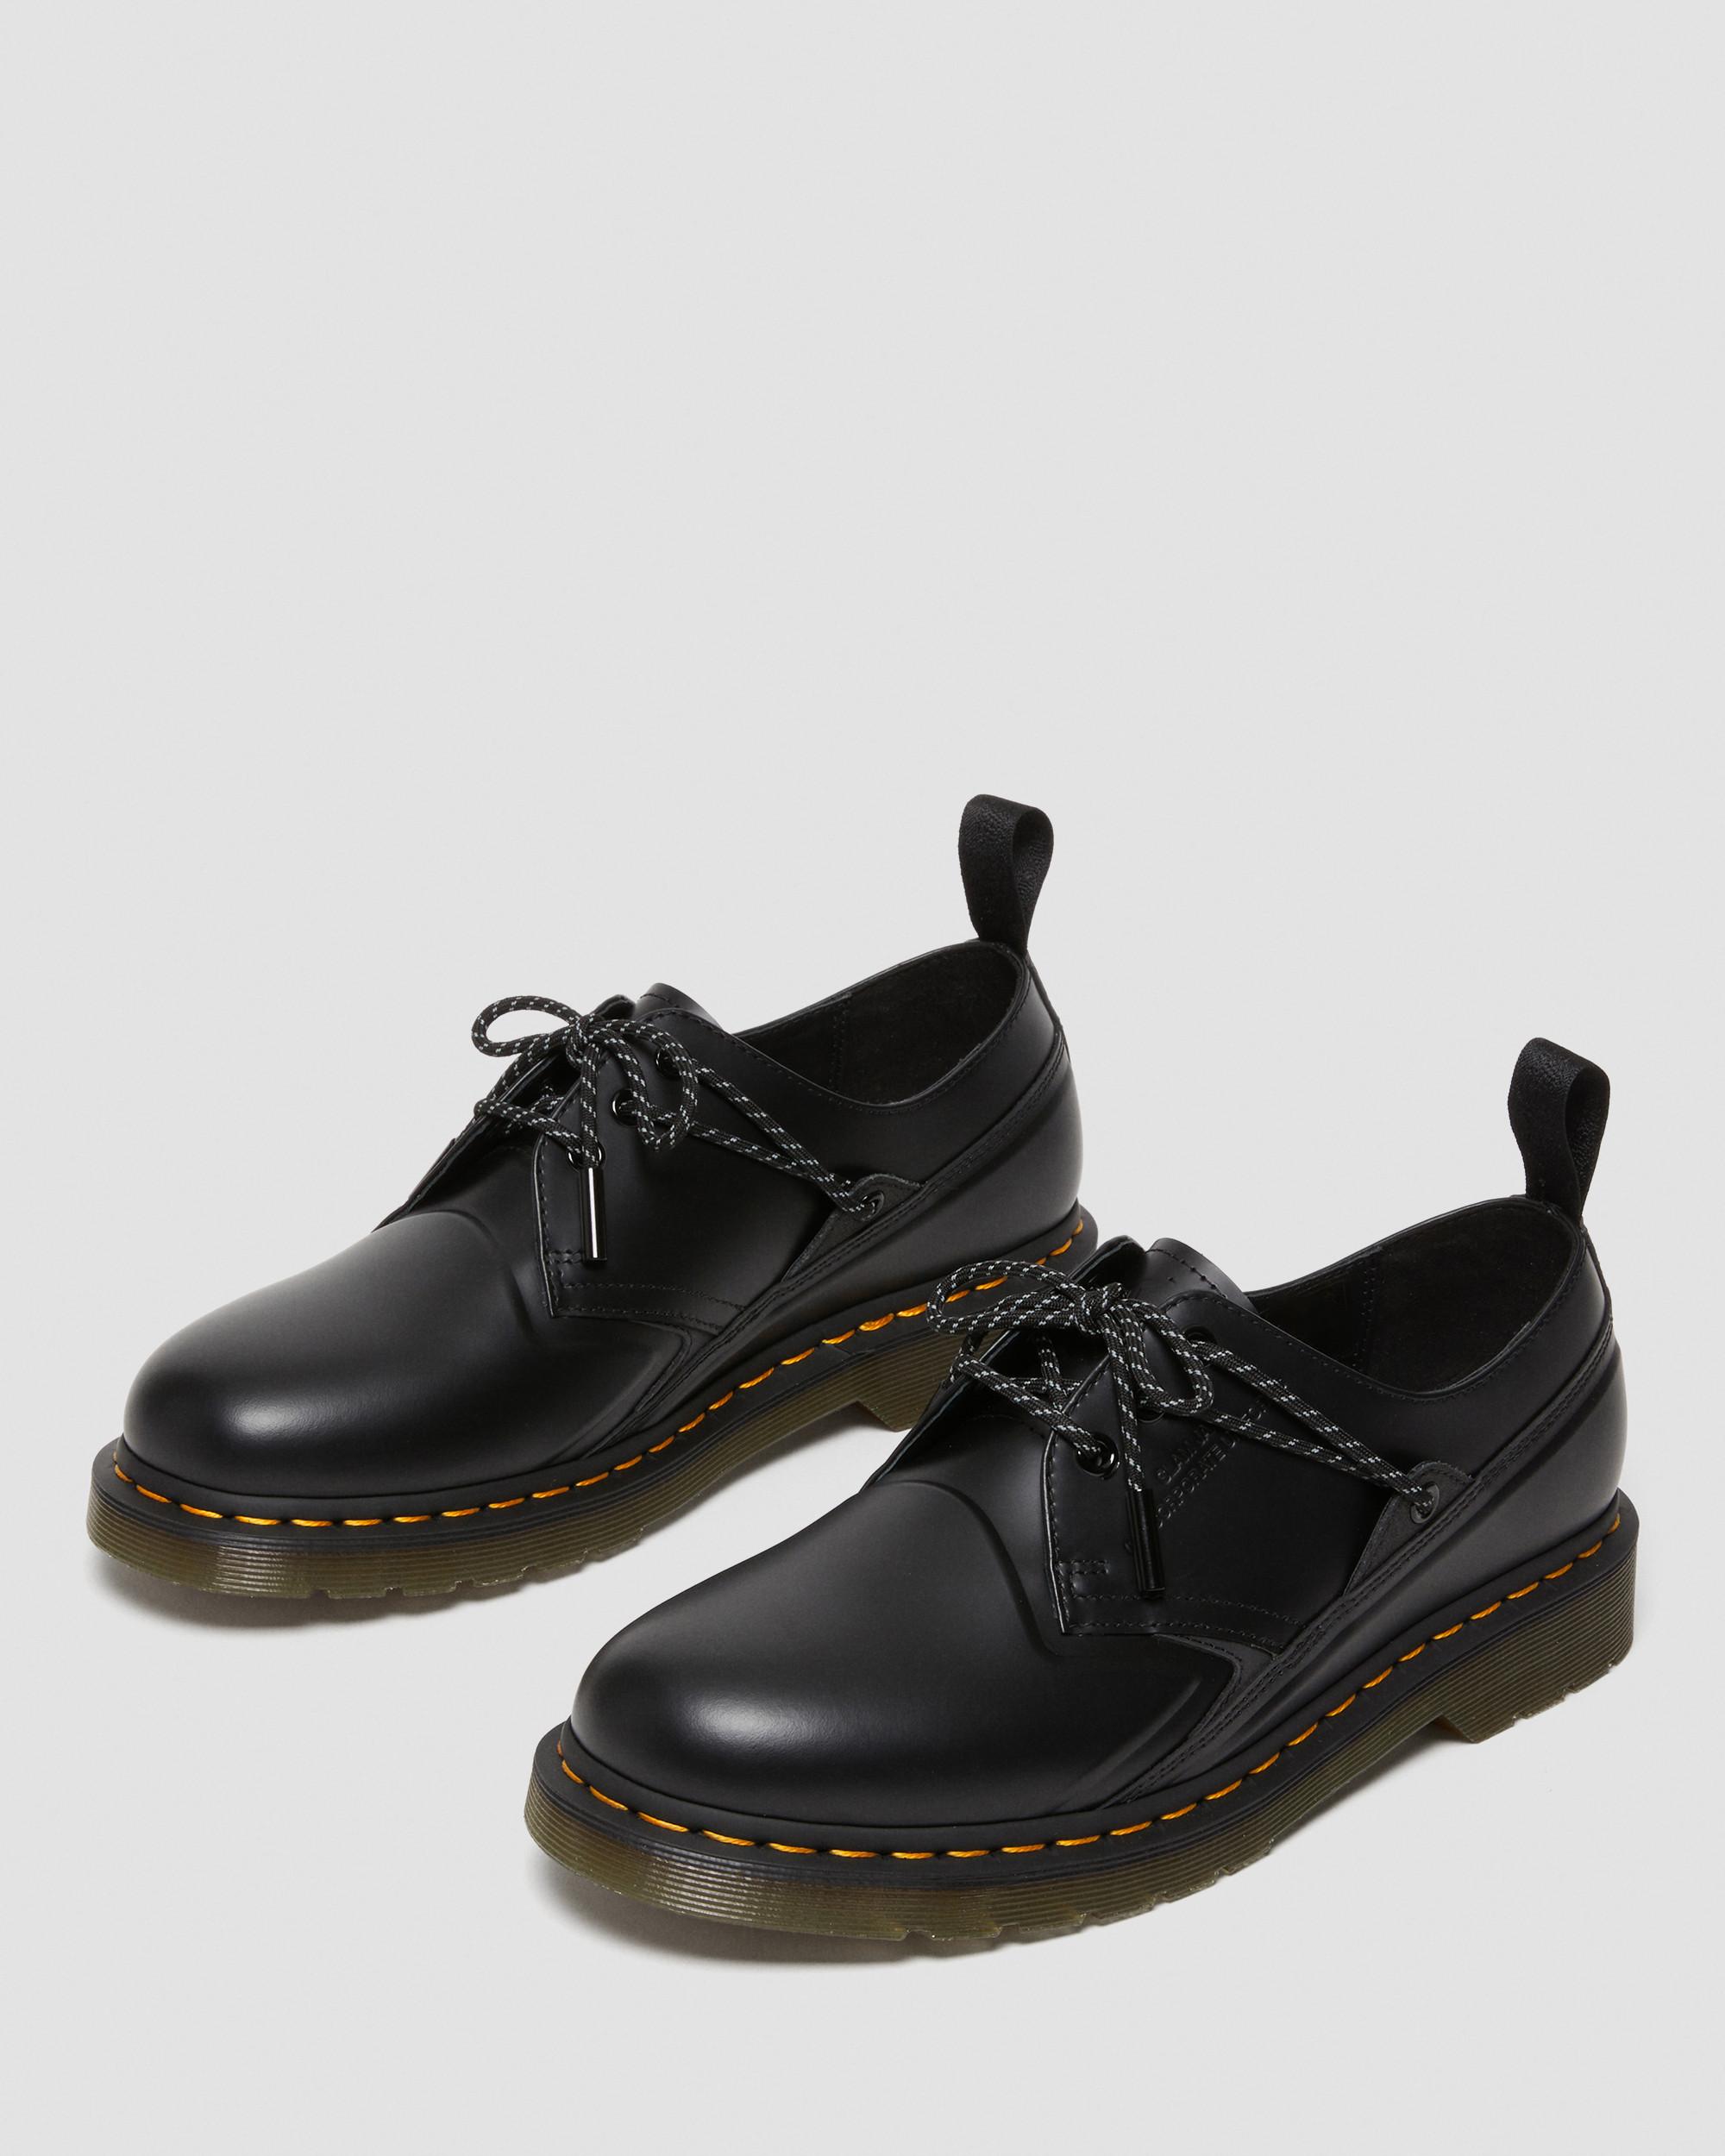 1461 Slam Jam Smooth Leather Shoes in Black | Dr. Martens